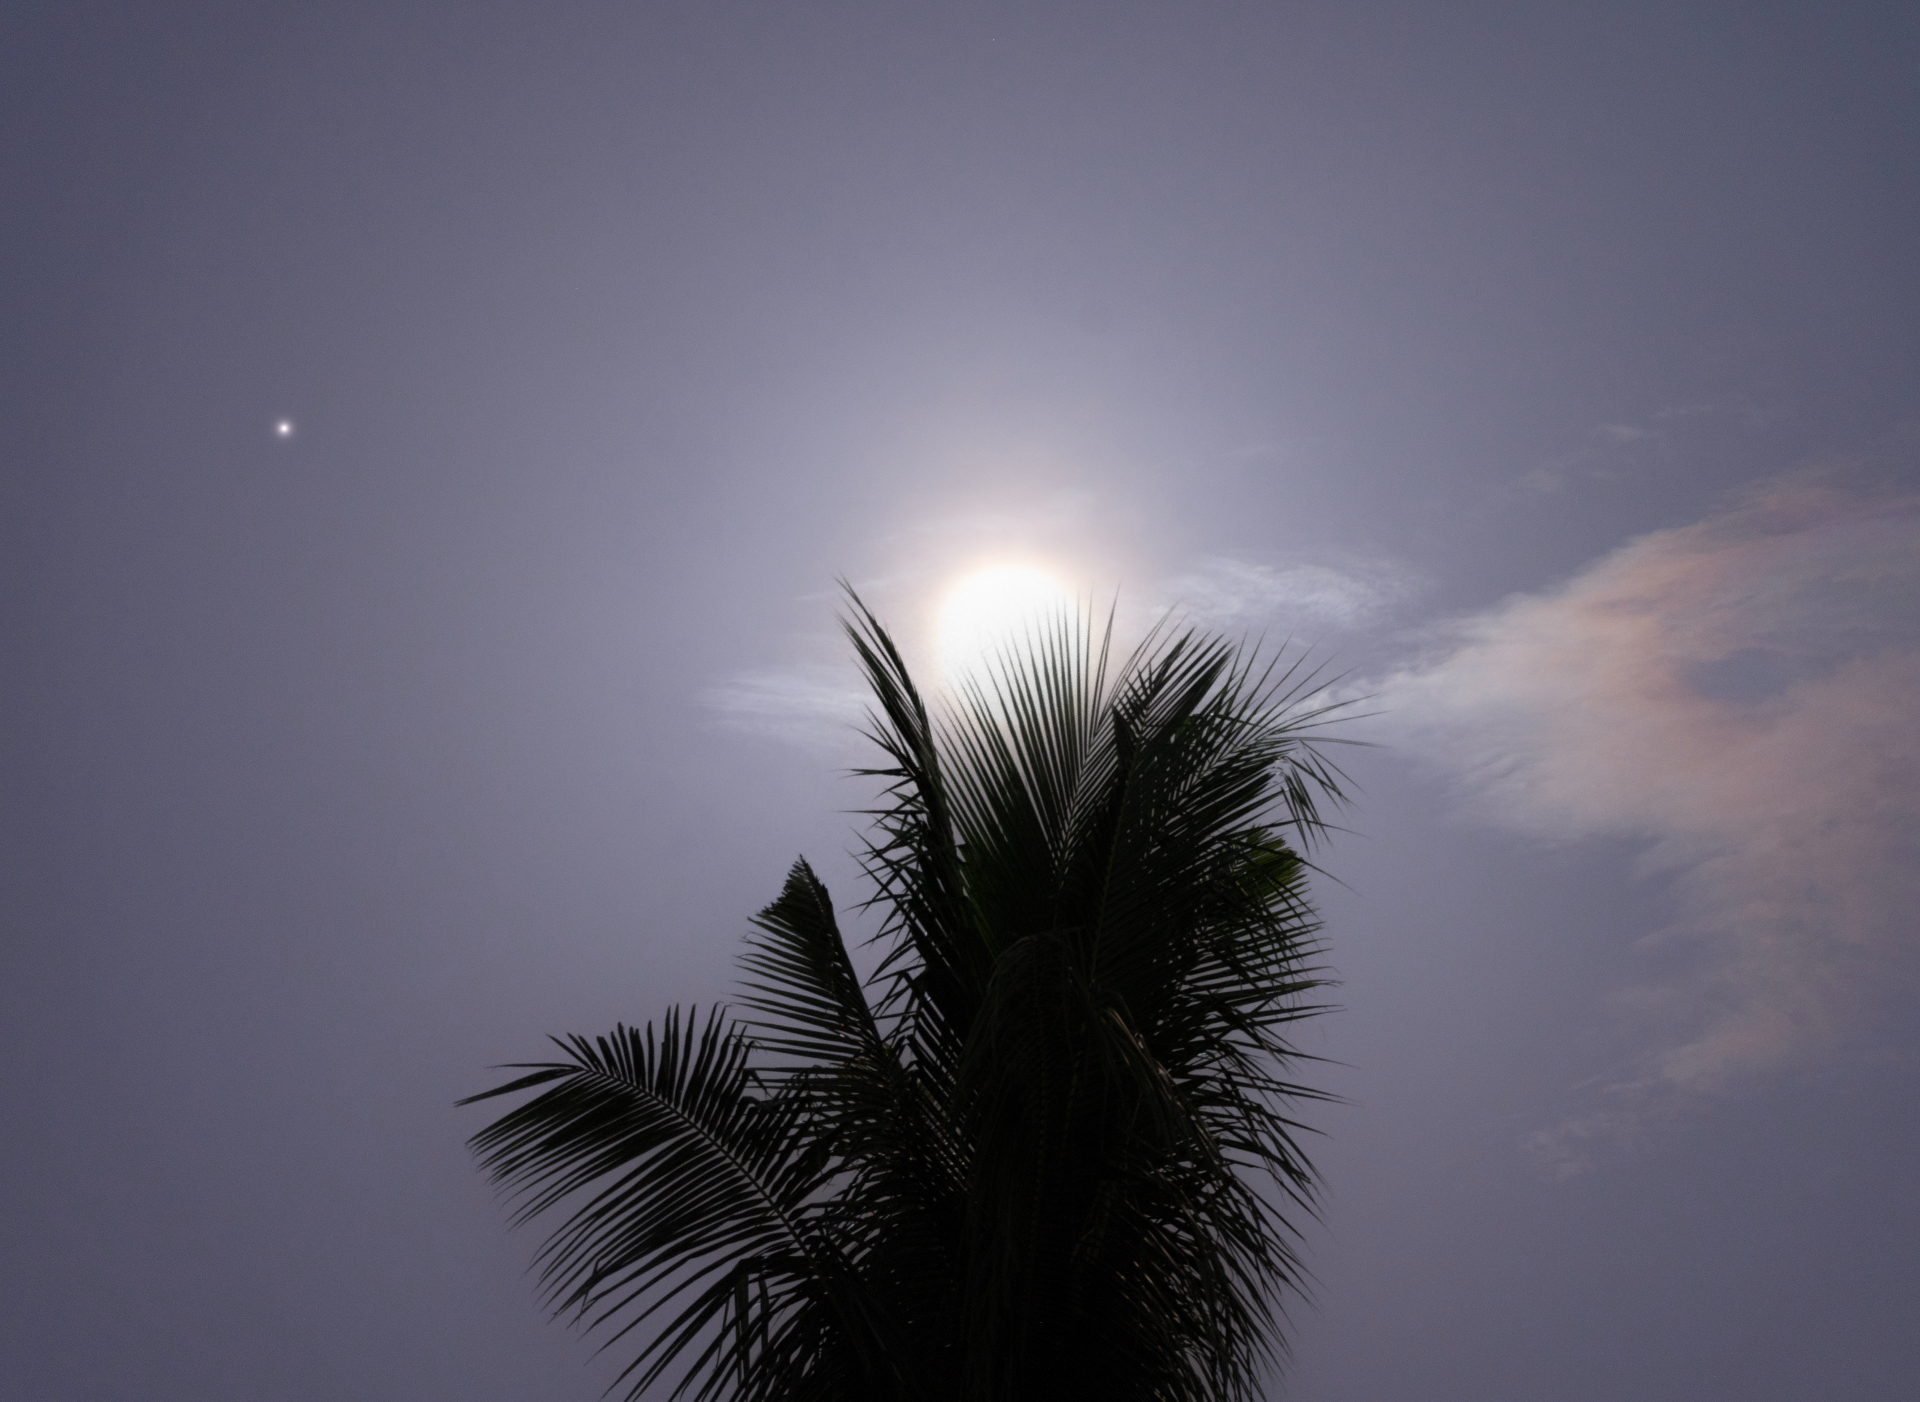 Bulan biru raksasa bersinar terang di balik pohon palem, dengan titik kecil Saturnus terlihat di sebelah kiri bulan.